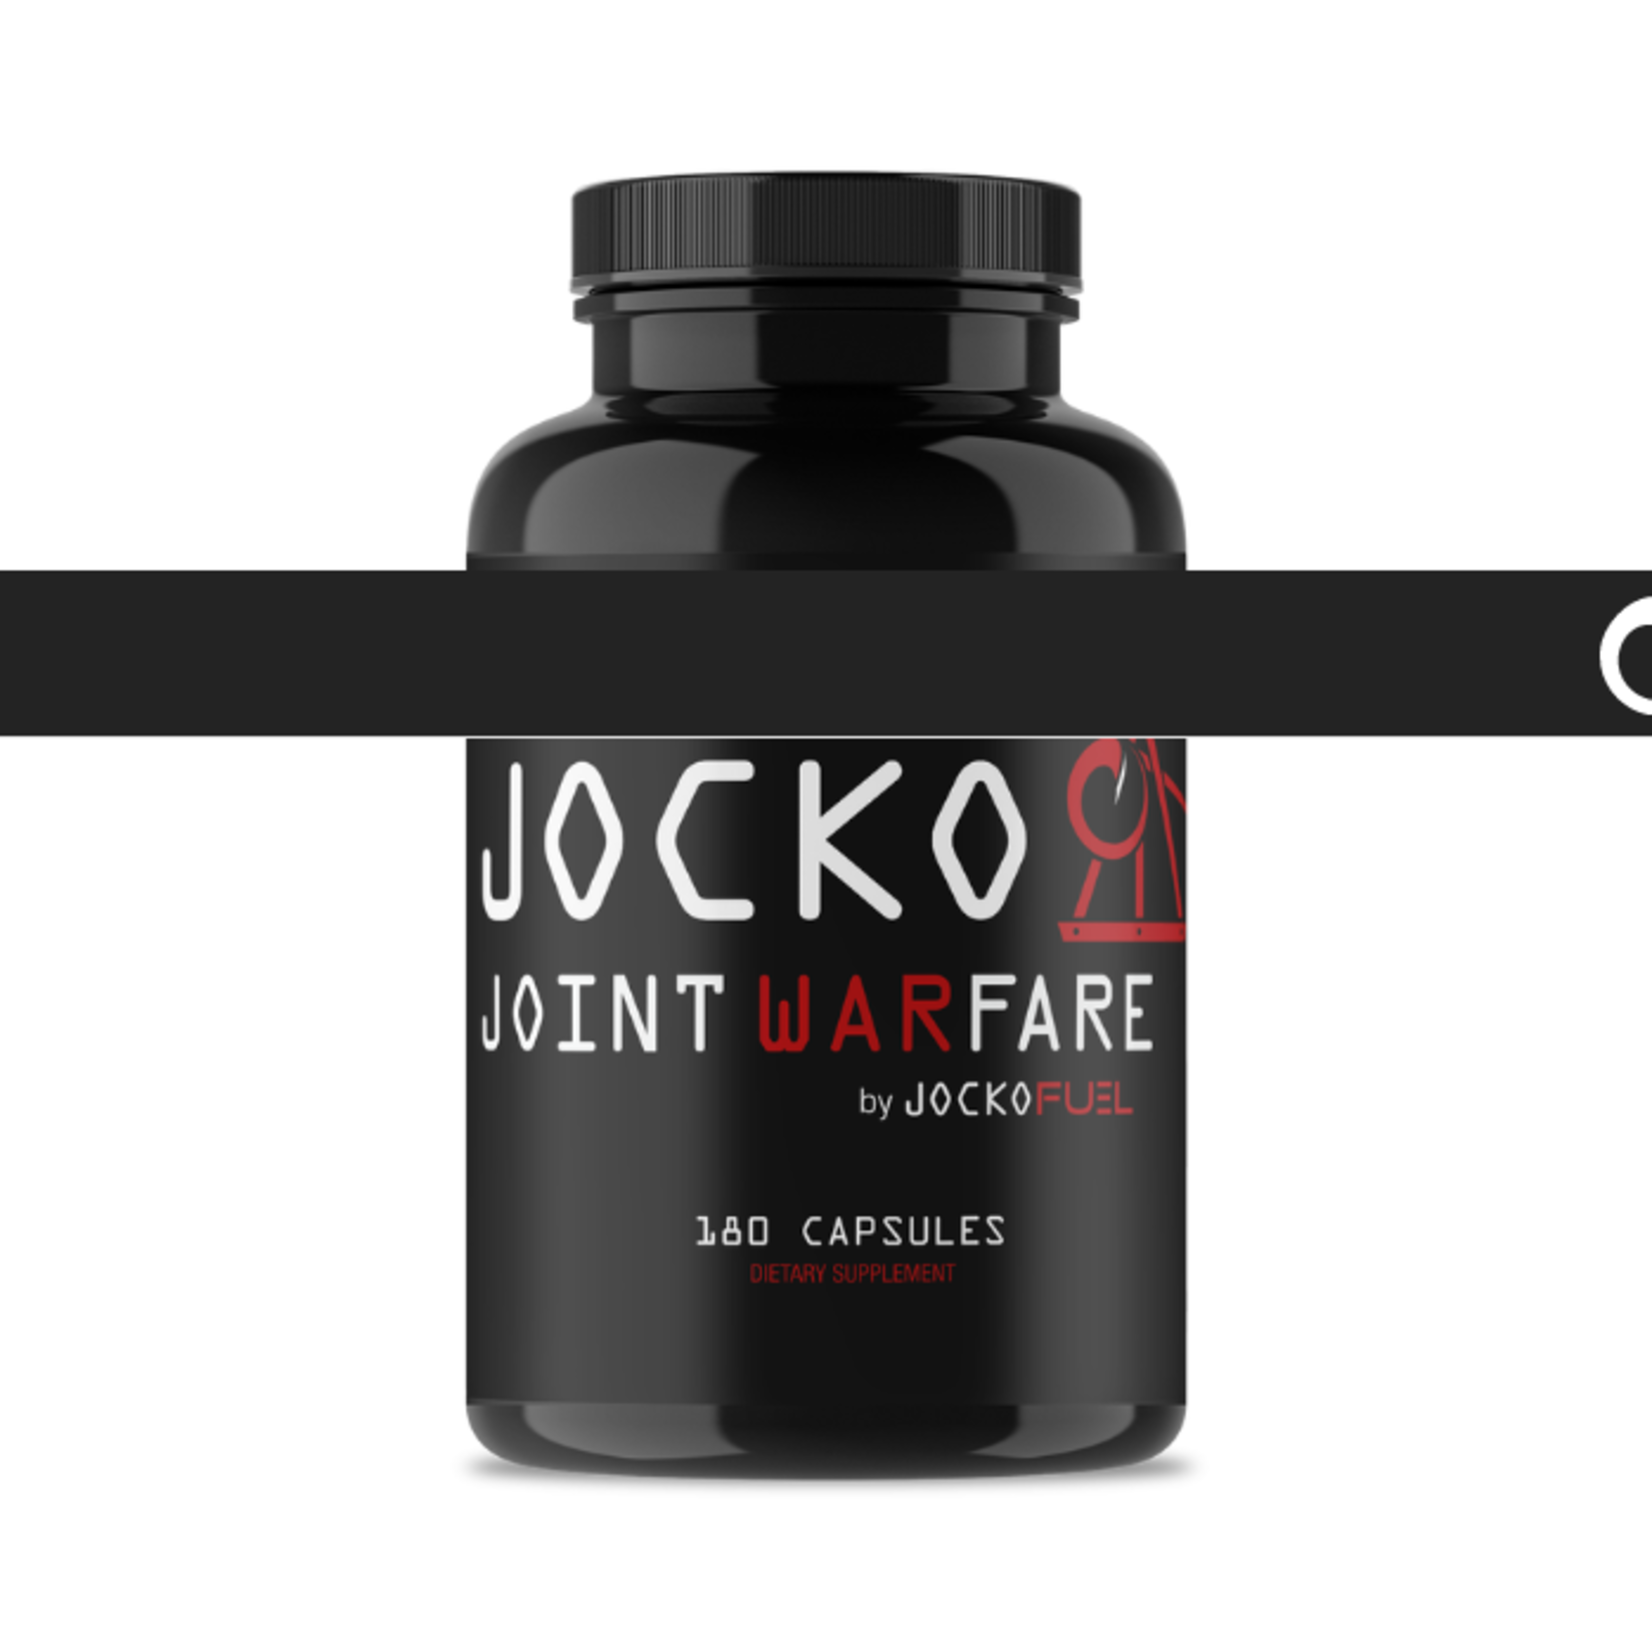 Jocko Jocko Joint Warfare